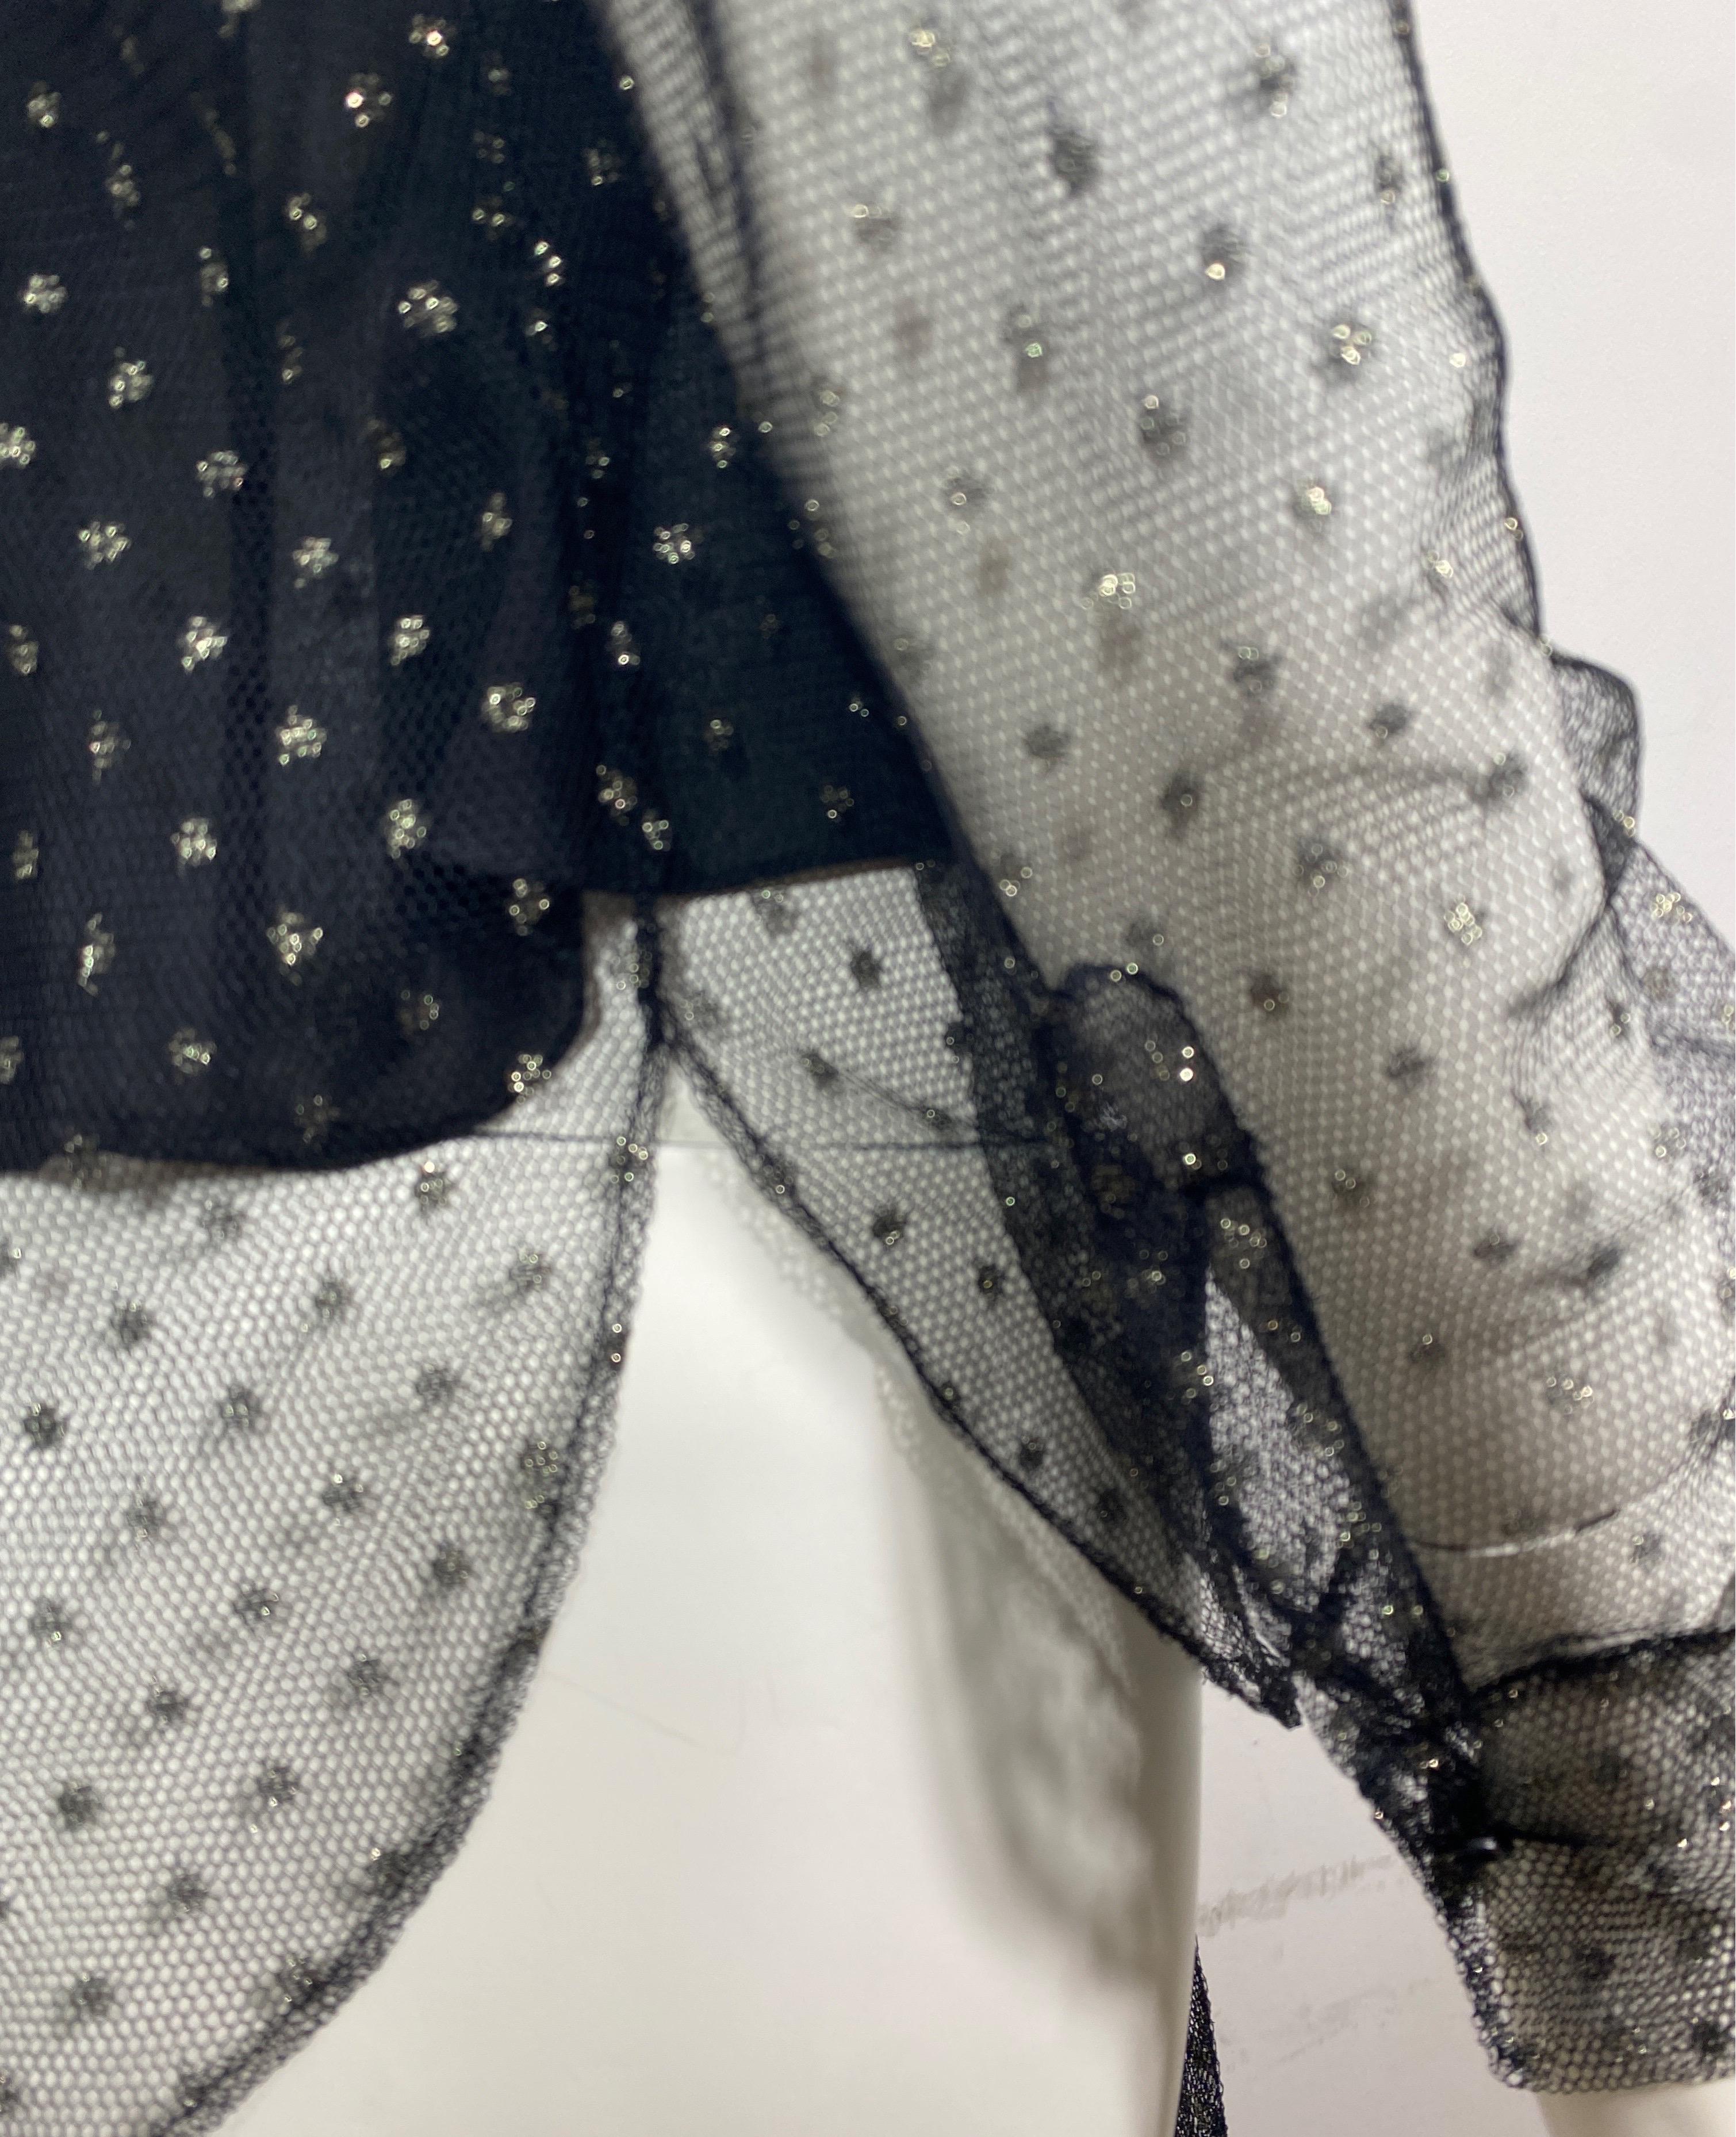 Christian Dior Mini Polka Dot Sheer Mesh Top noir et or - Taille petite en vente 5